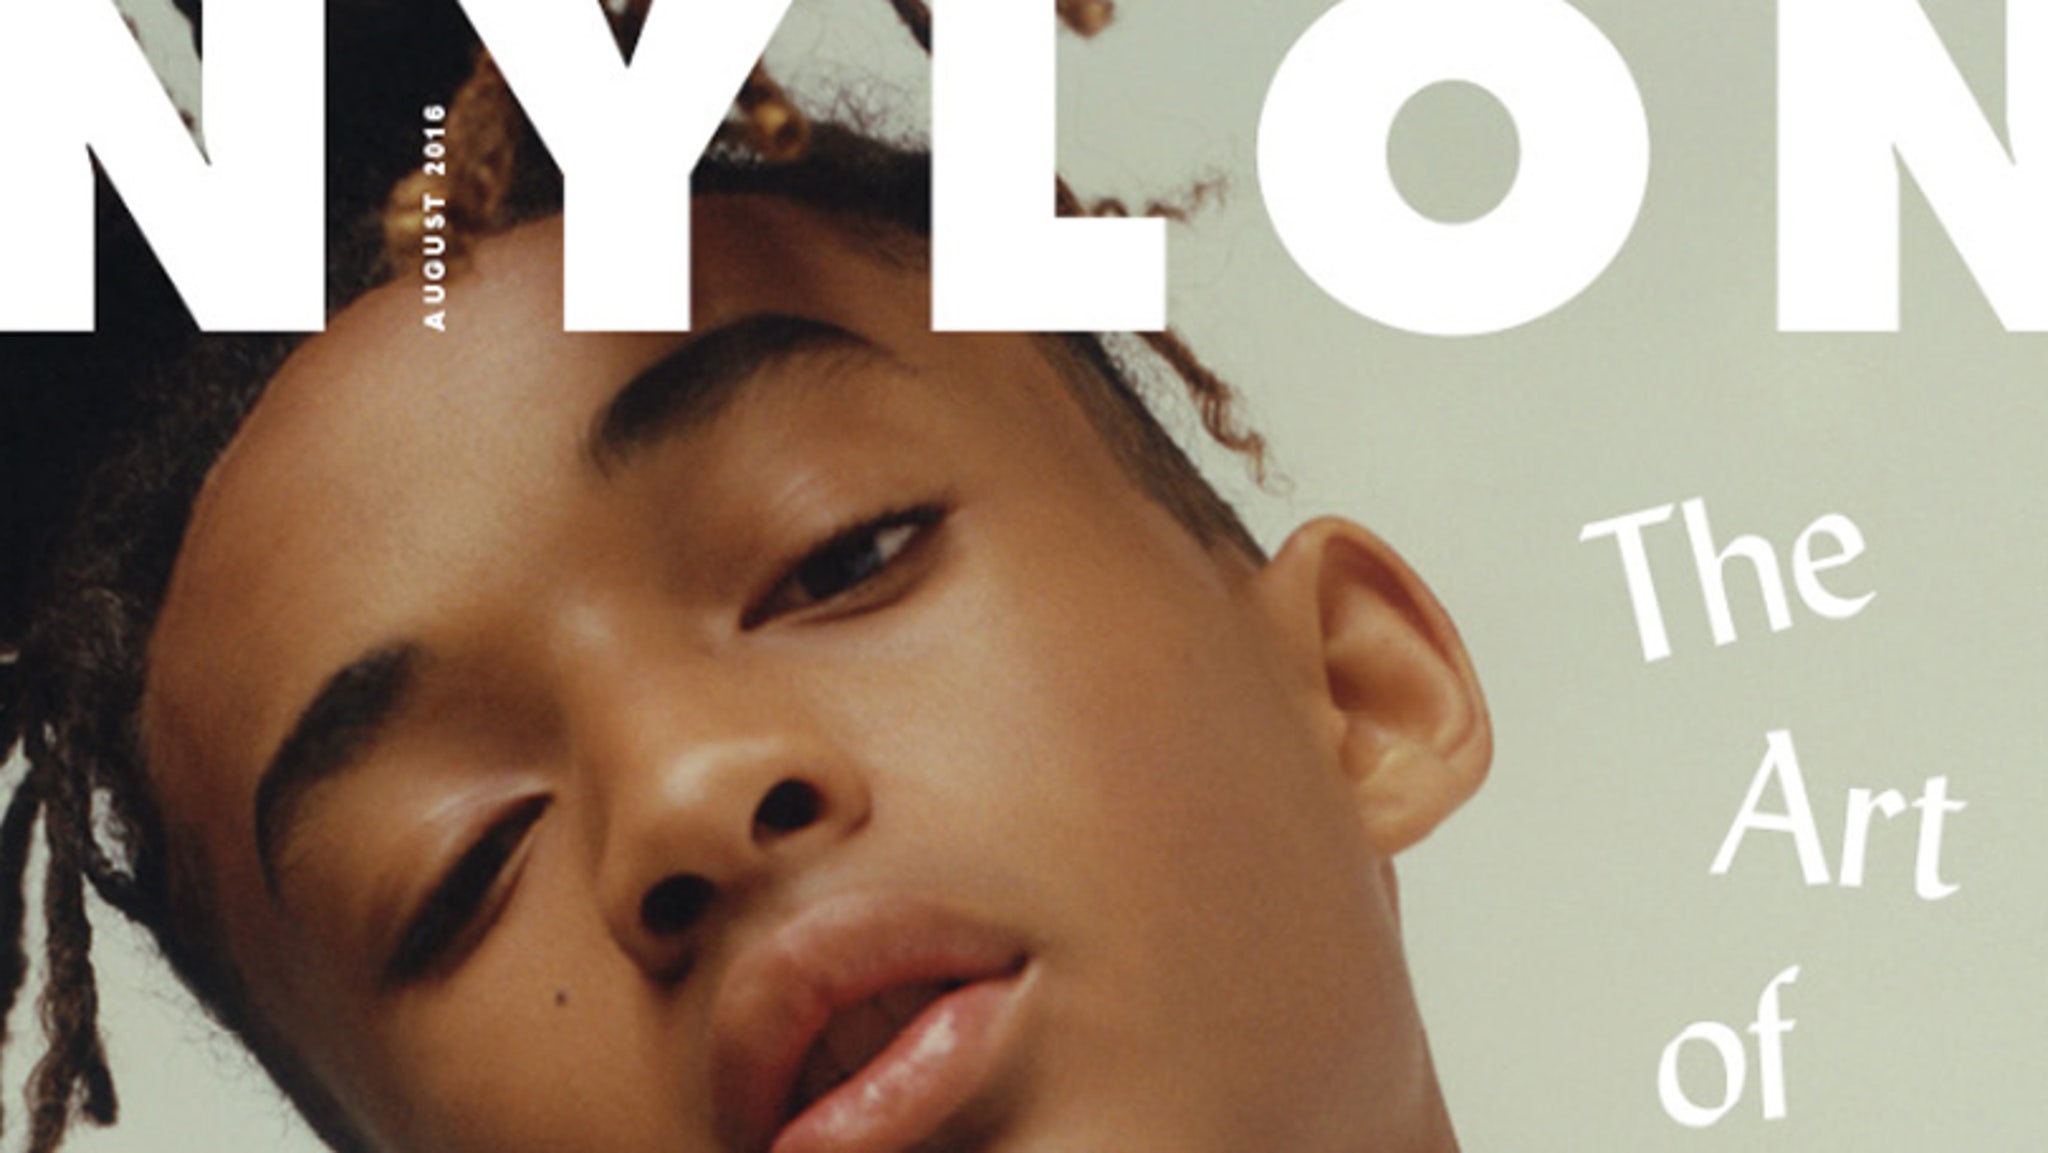 Tyler, The Creator For Nylon Magazine